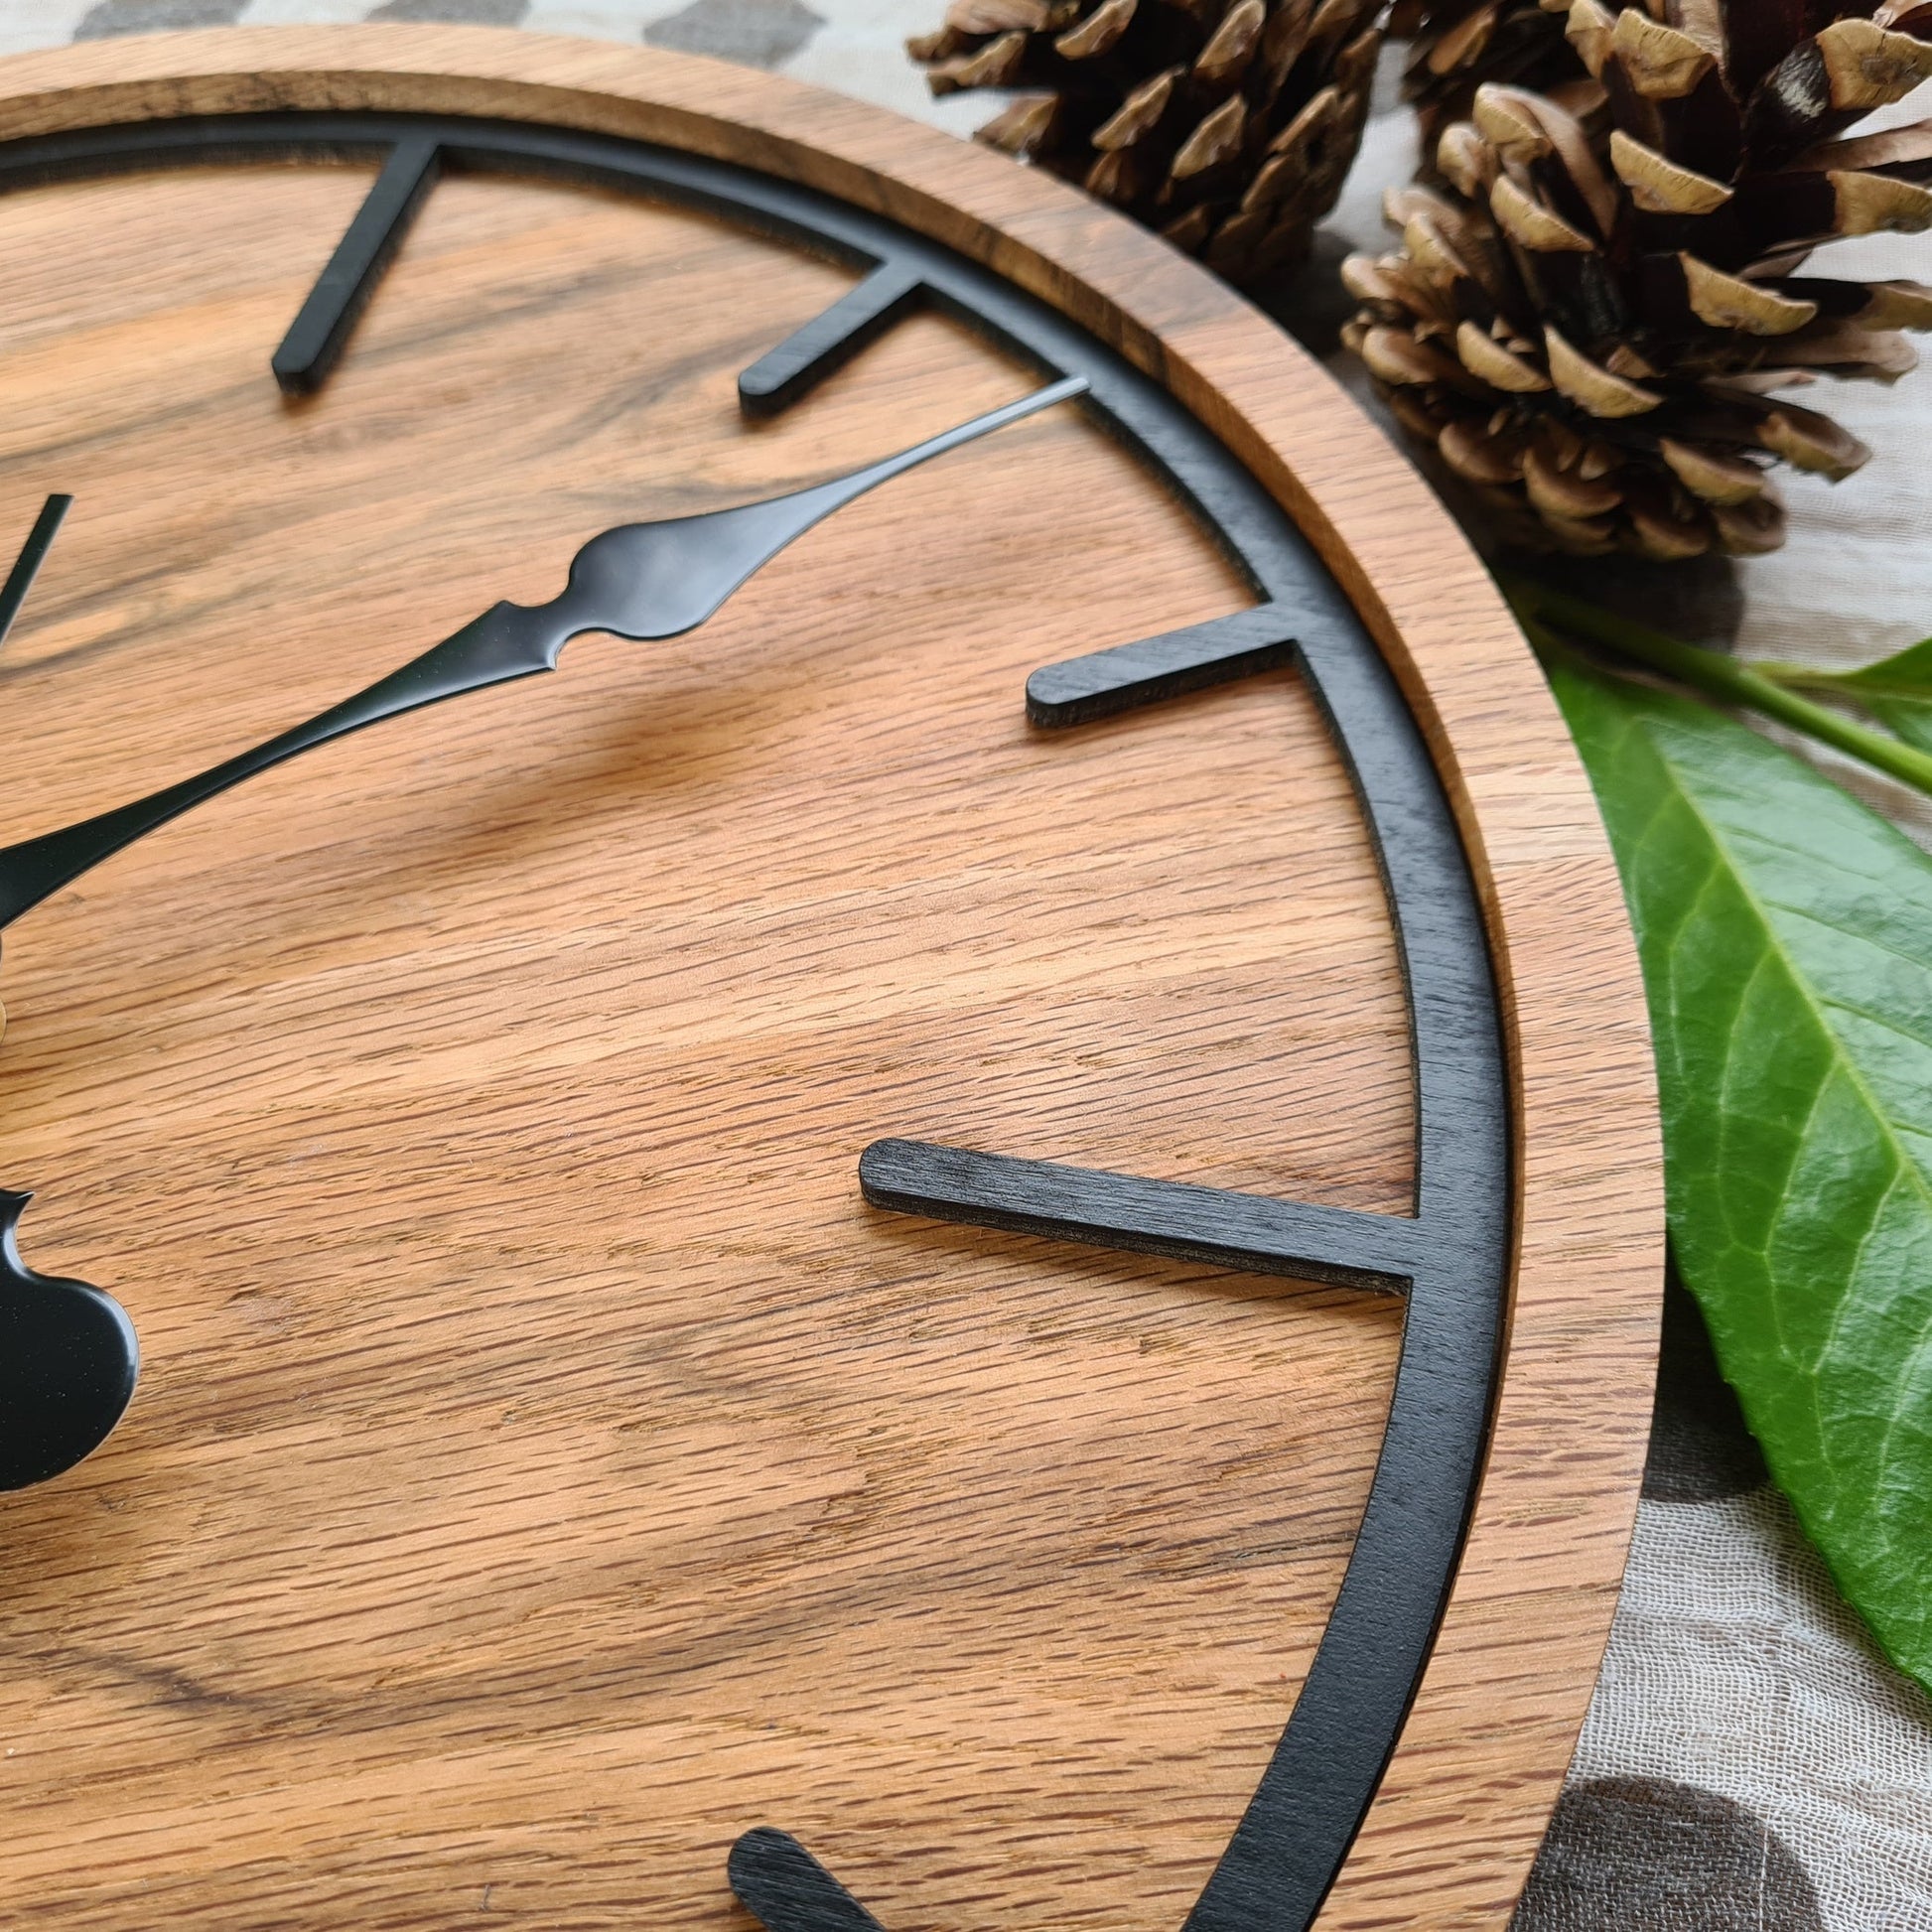 100% Solid Oak Wood Wall Clock | Round Swiss Mondaine Style | Modern kitchen clock - Clock Design Co™